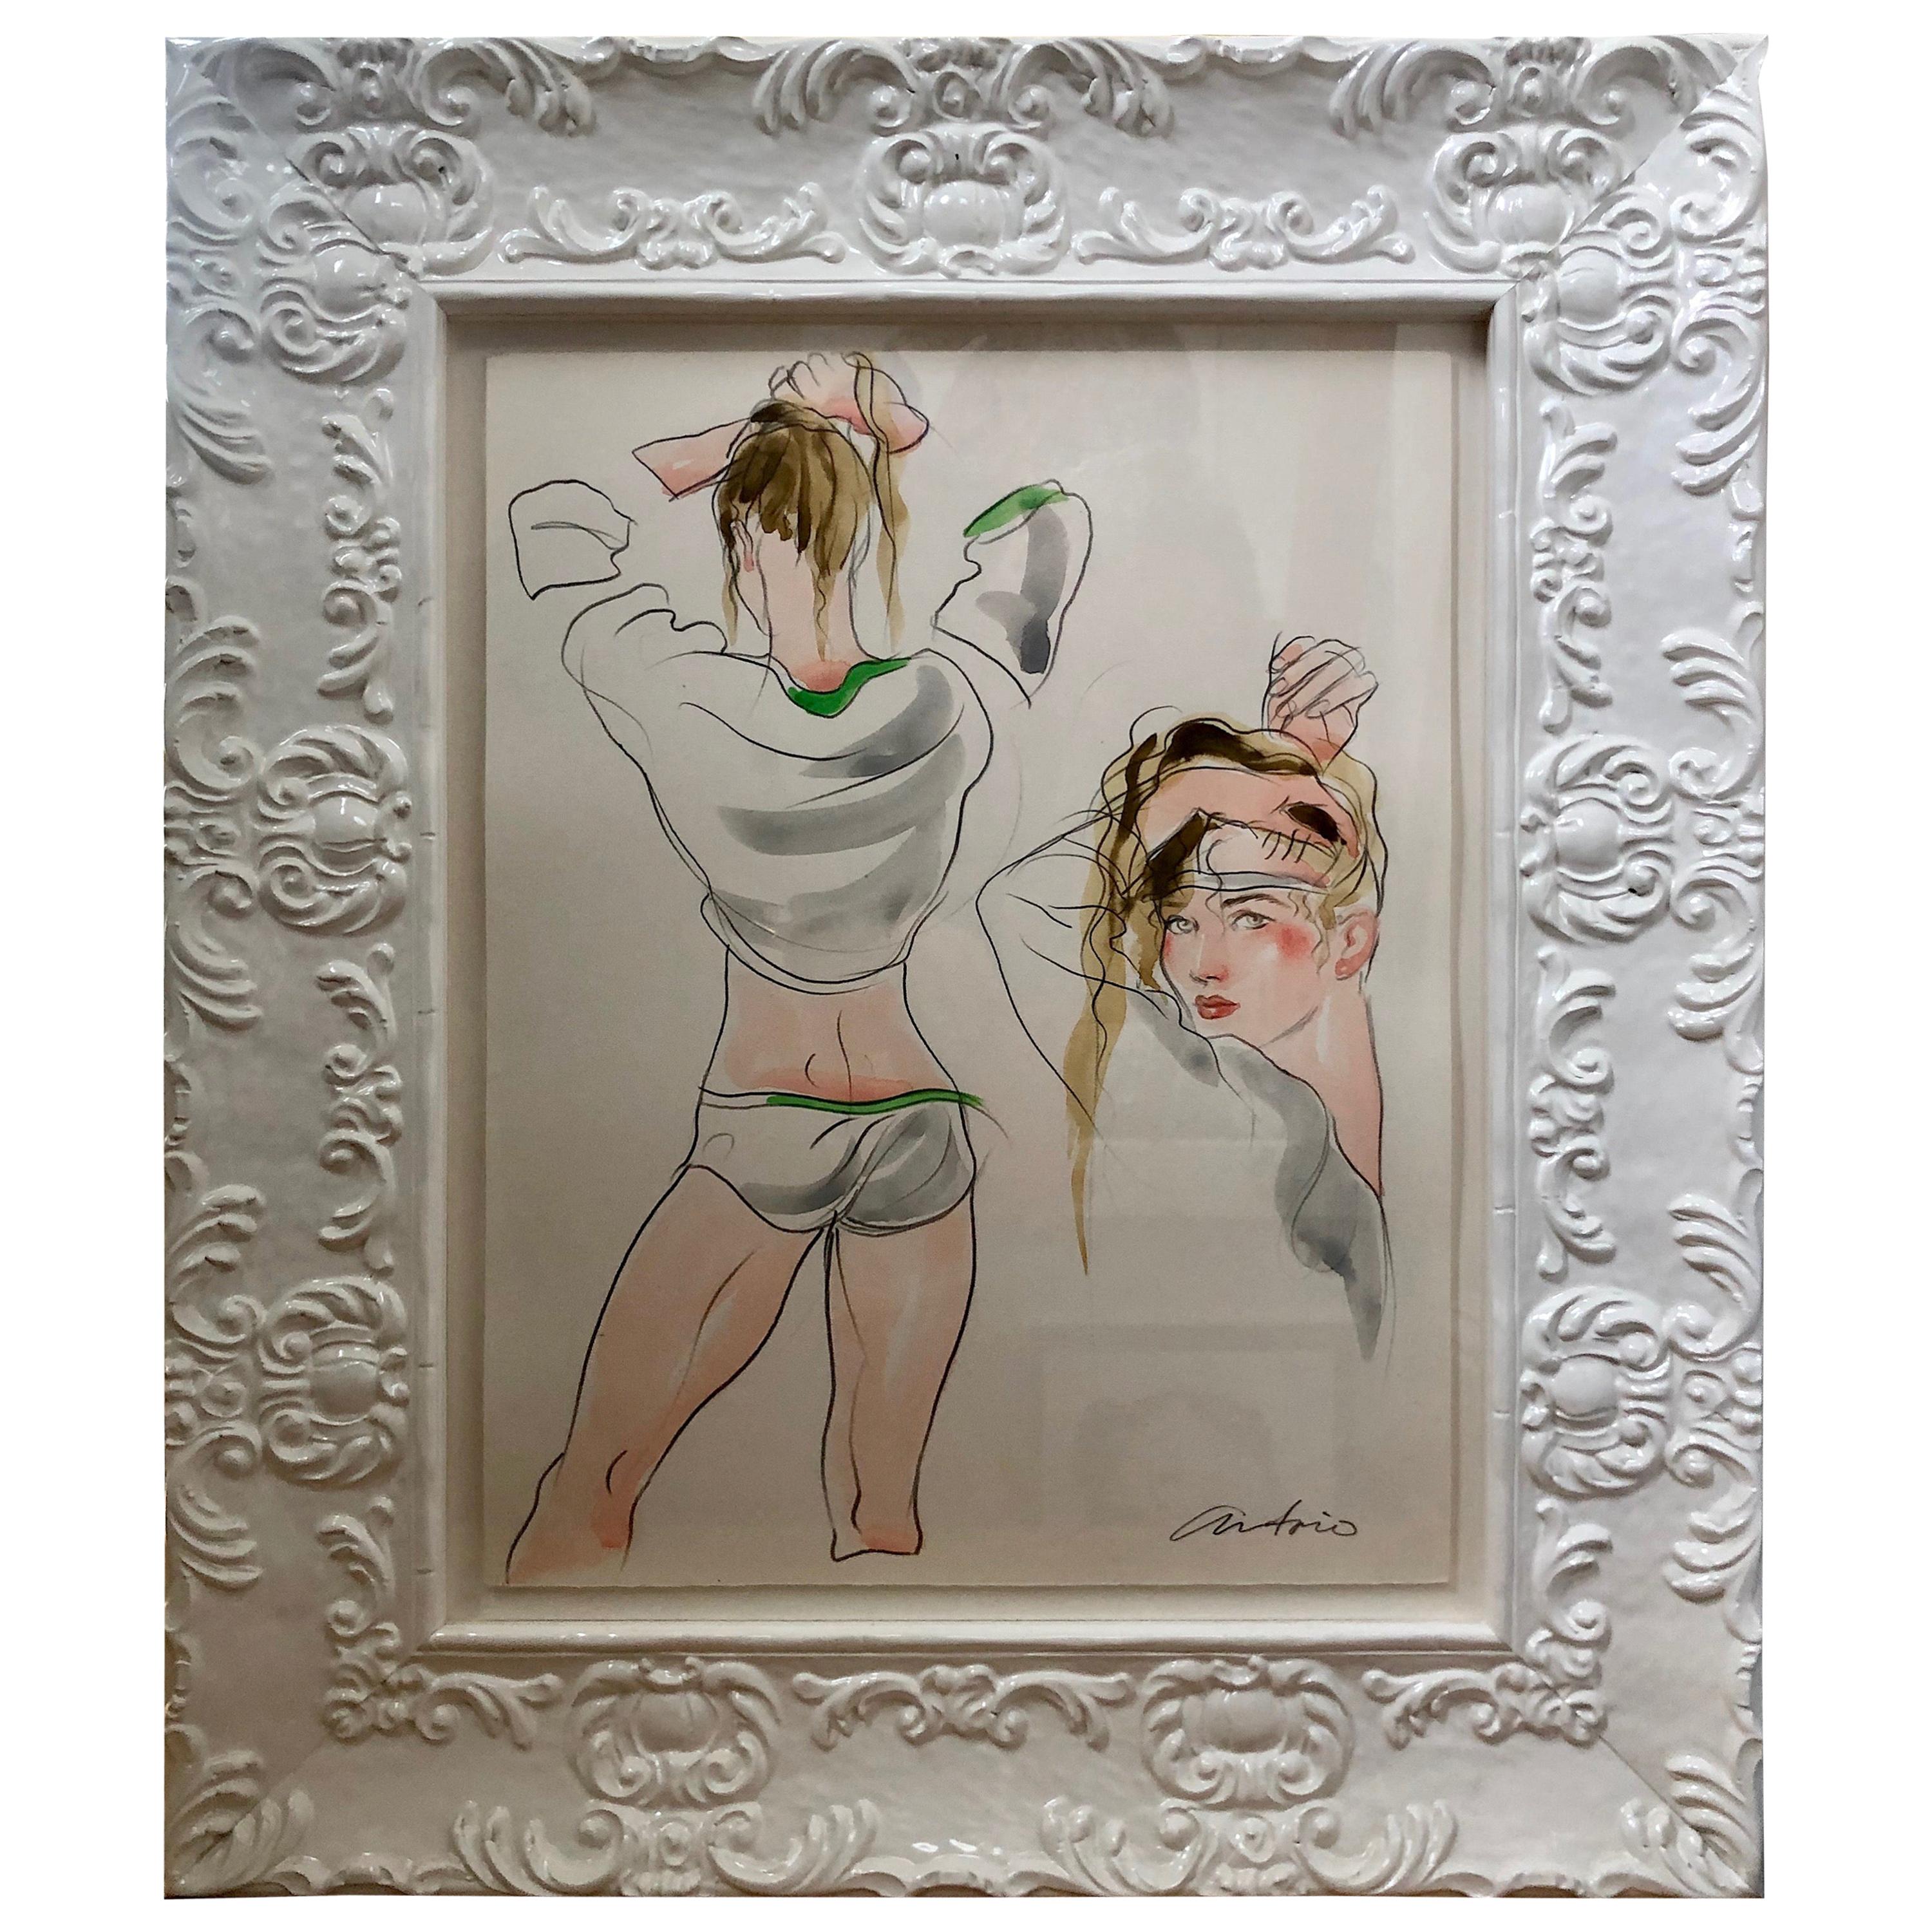 Antonio Lopez Original Framed Watercolor of an Underwear Fashion Illustration